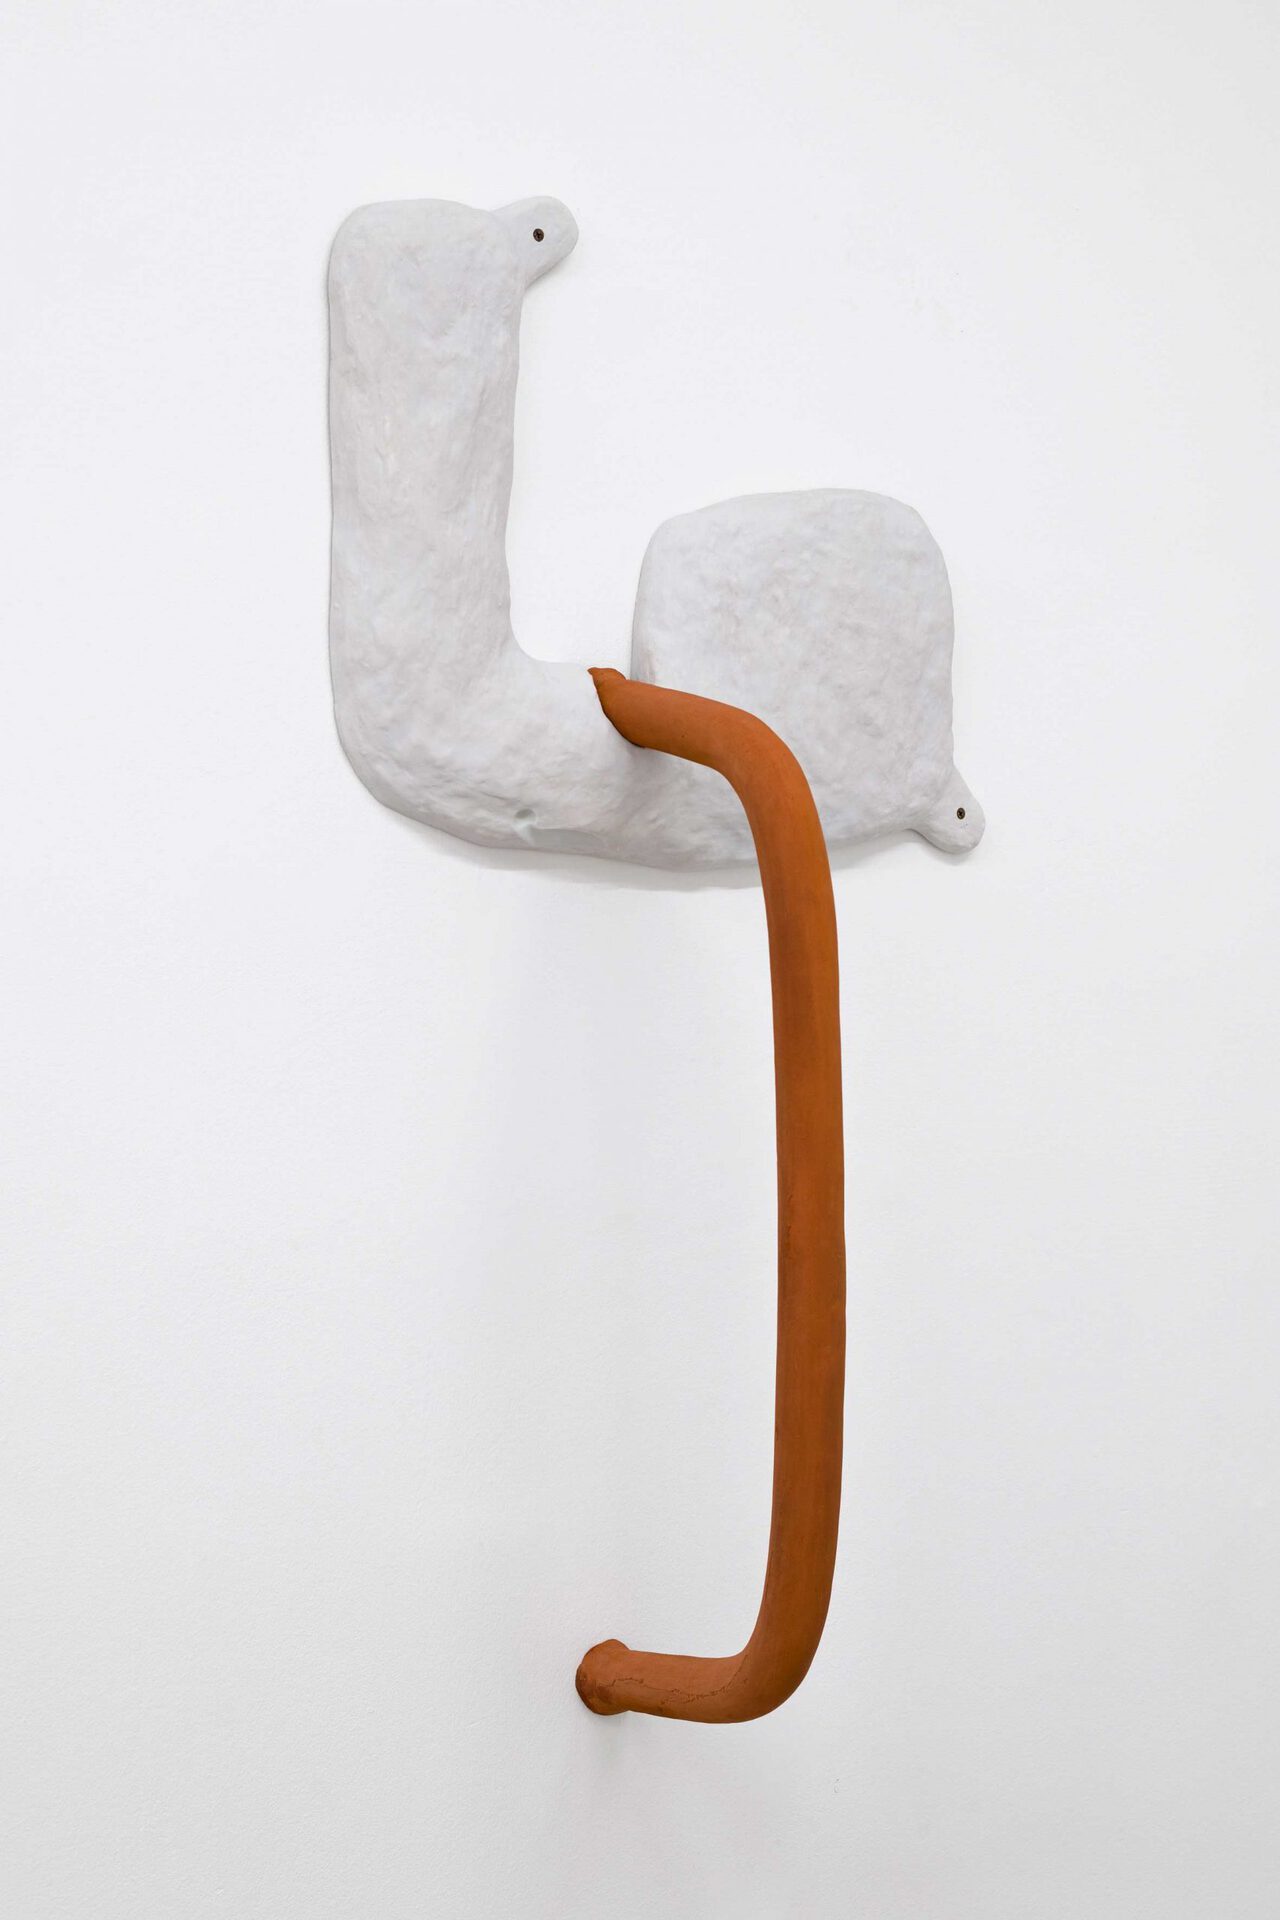 Phanos Kyriacou, Common Handles, 2021, terracotta, cast polyurethane resin, stainless steel, 122 x 30 x 40 cm.